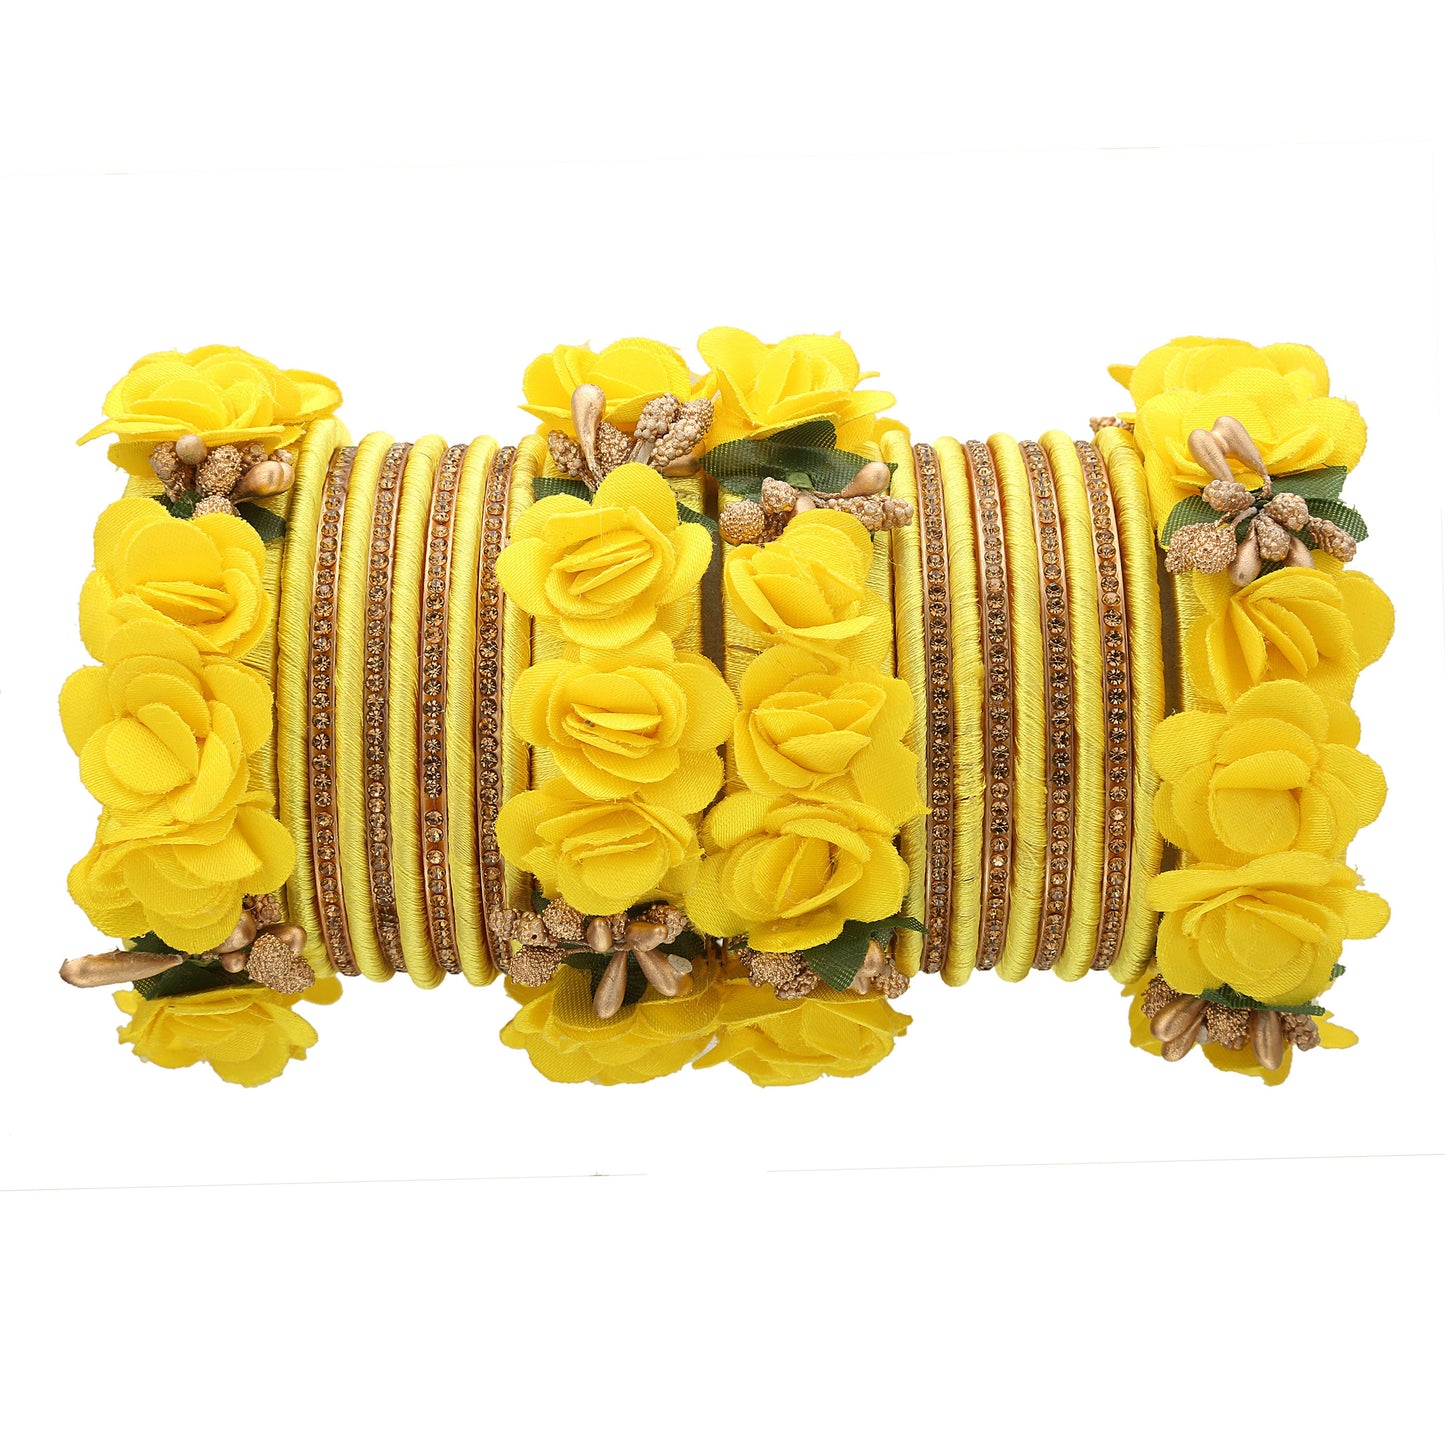 sukriti beautiful handcrafted lemonyellow flower designer silk thread bridal chuda wedding bangles for women – set of 22